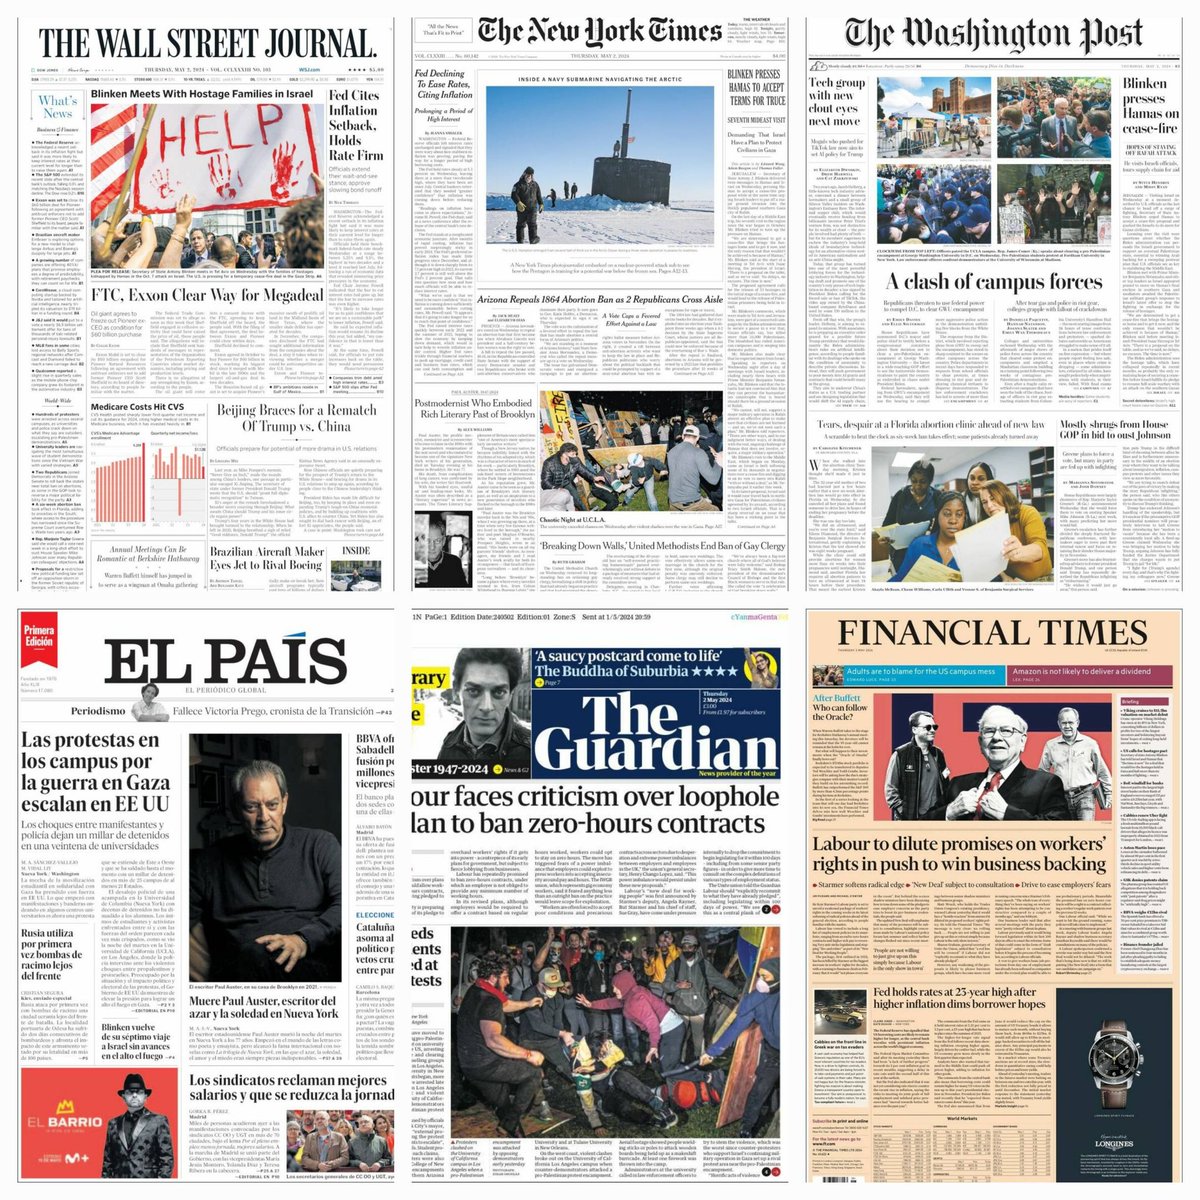 Periódicos en el mundo... #TheWallstreetJournal #Thenewyorktimes #Thewashingtonpost #TheGuardian #ElPaís #Financialtimes #news #newspaper #may2